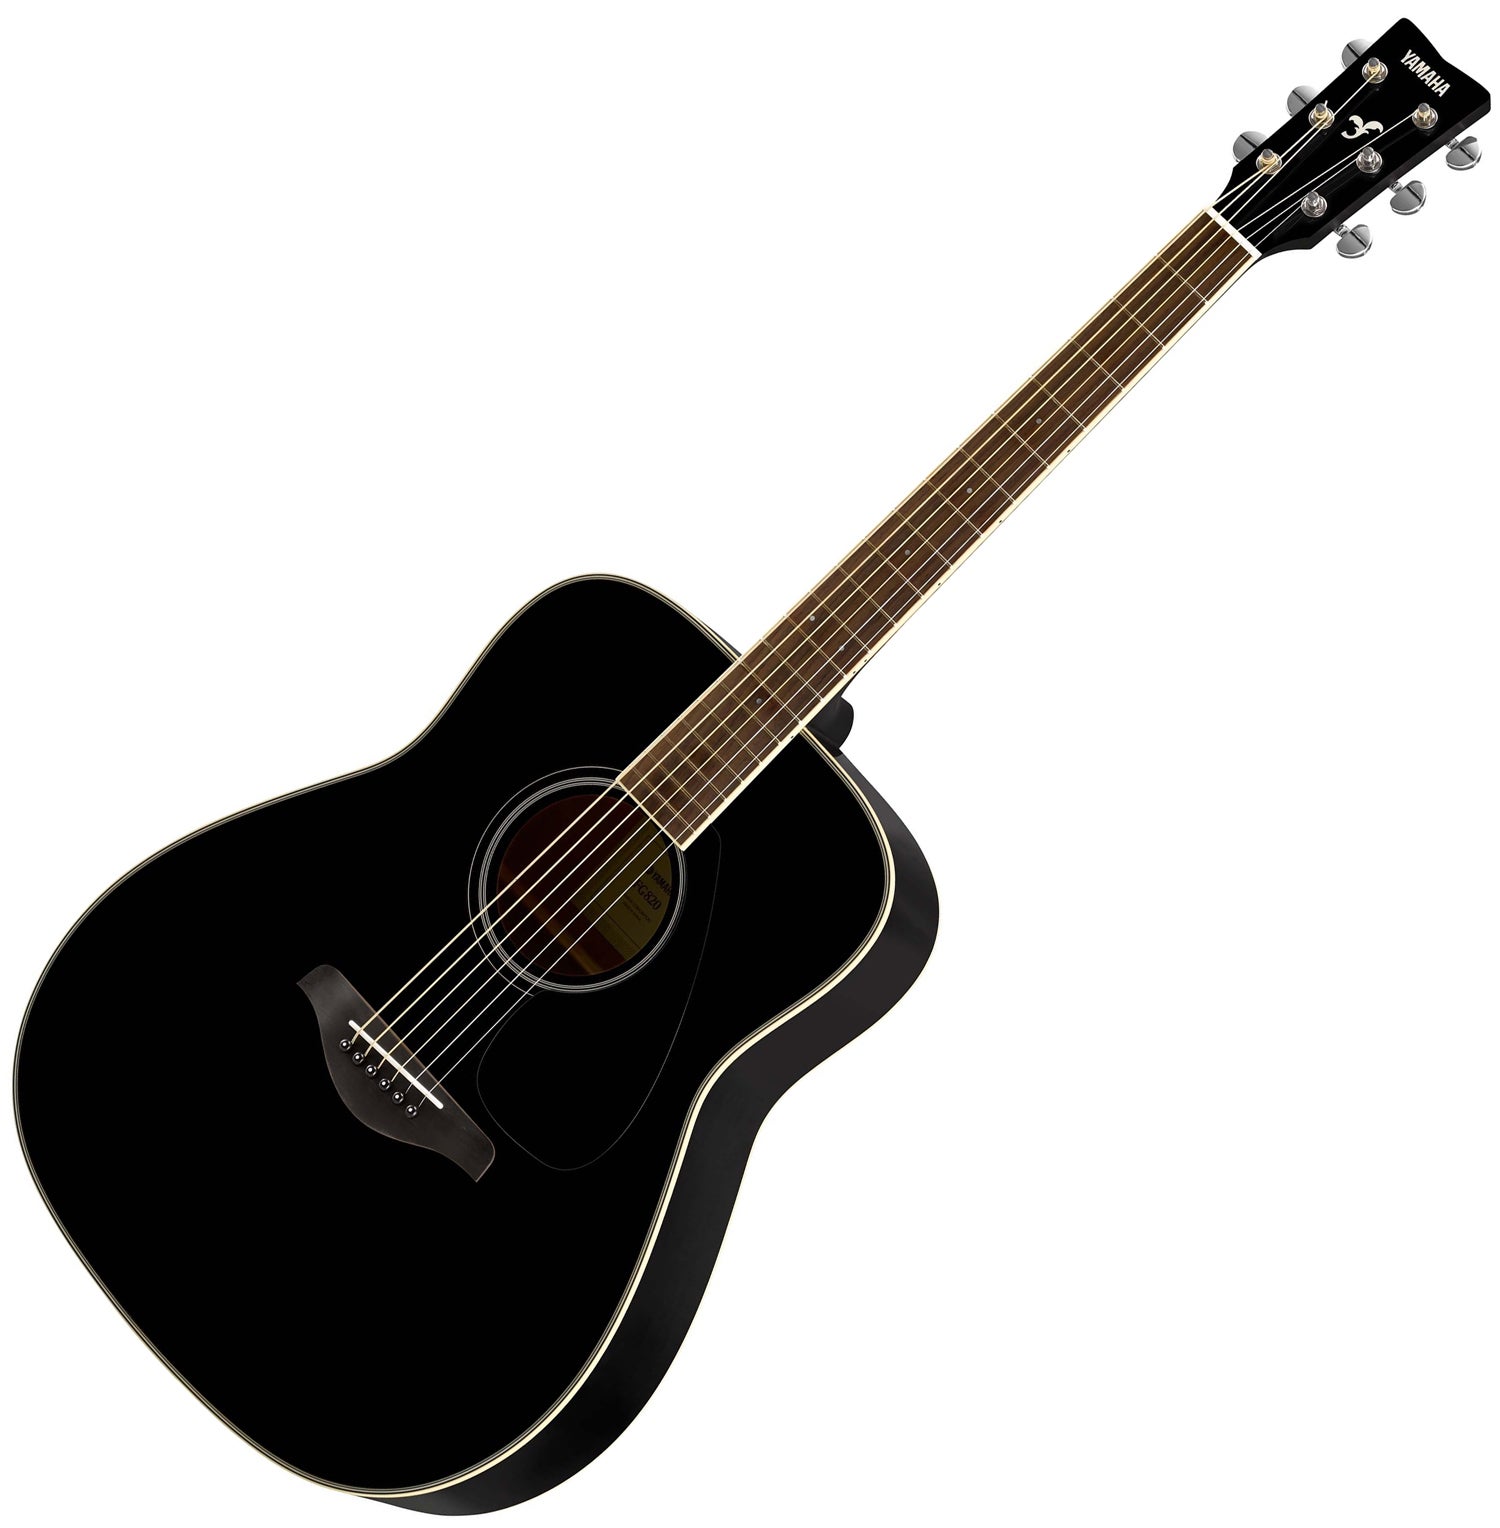 Yamaha Fg820 Bl Solid Top Acoustic Guitar, Black | Music Works